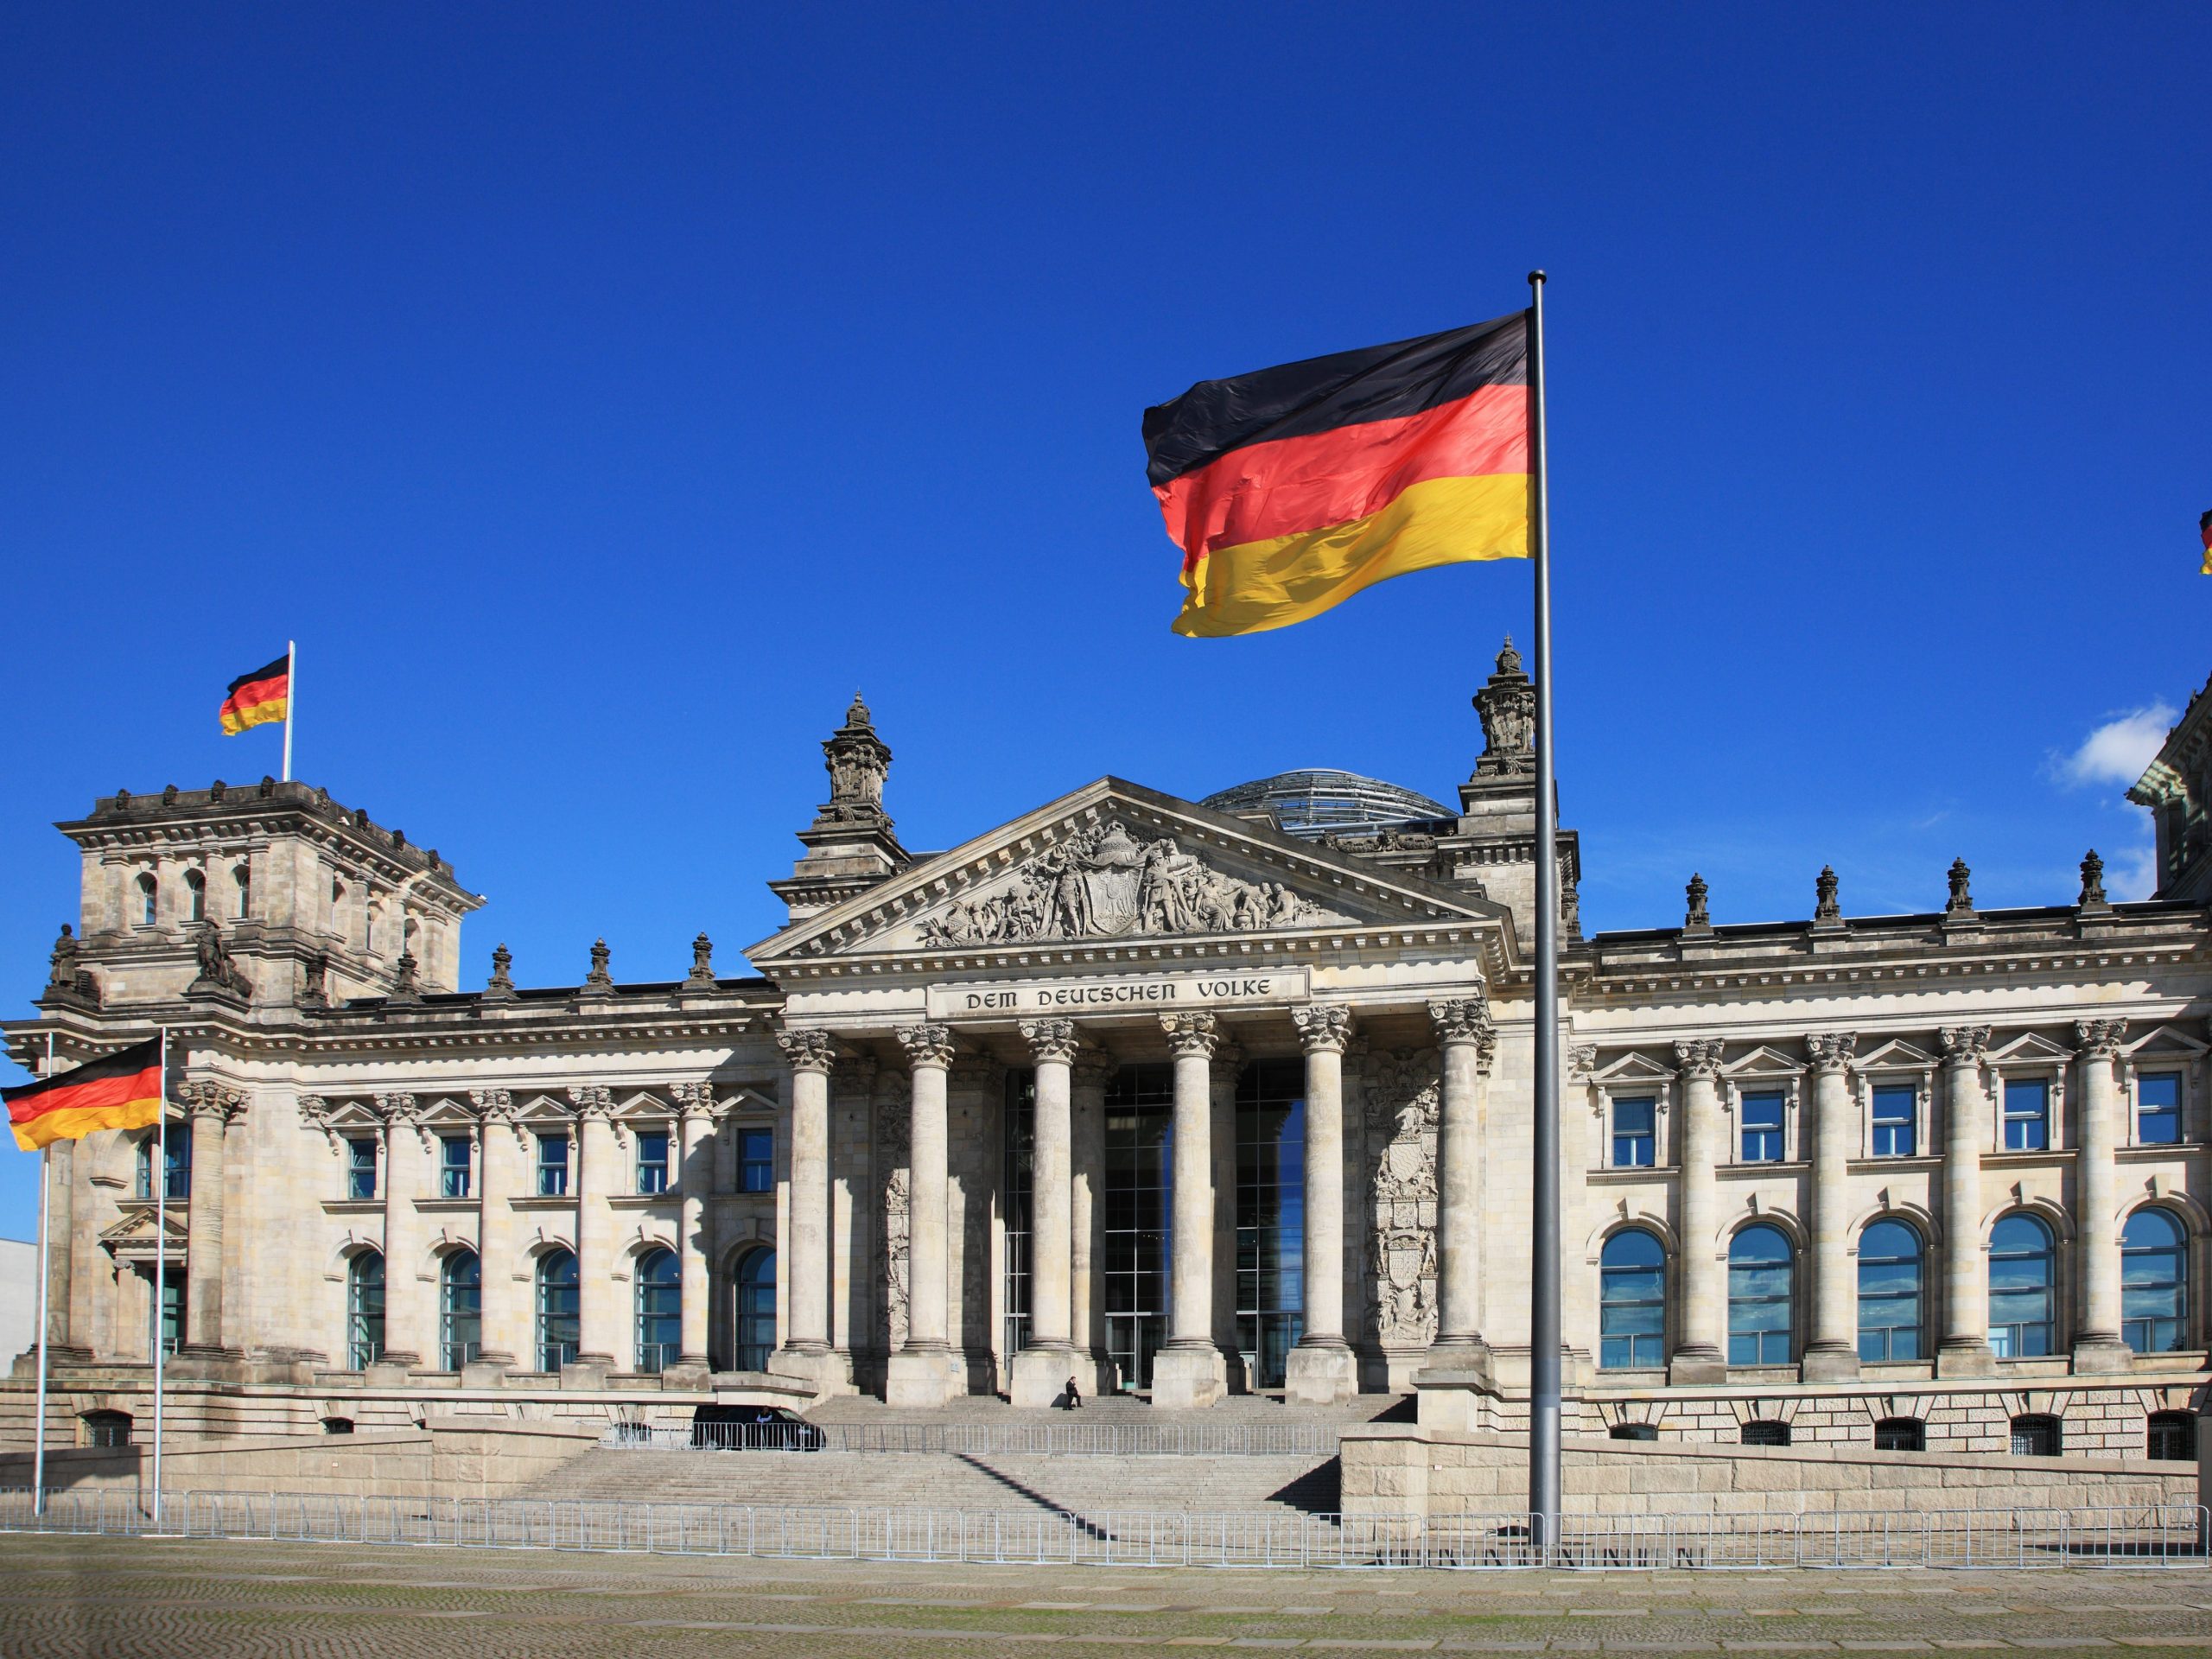 The Reichstag, German Parliament Building